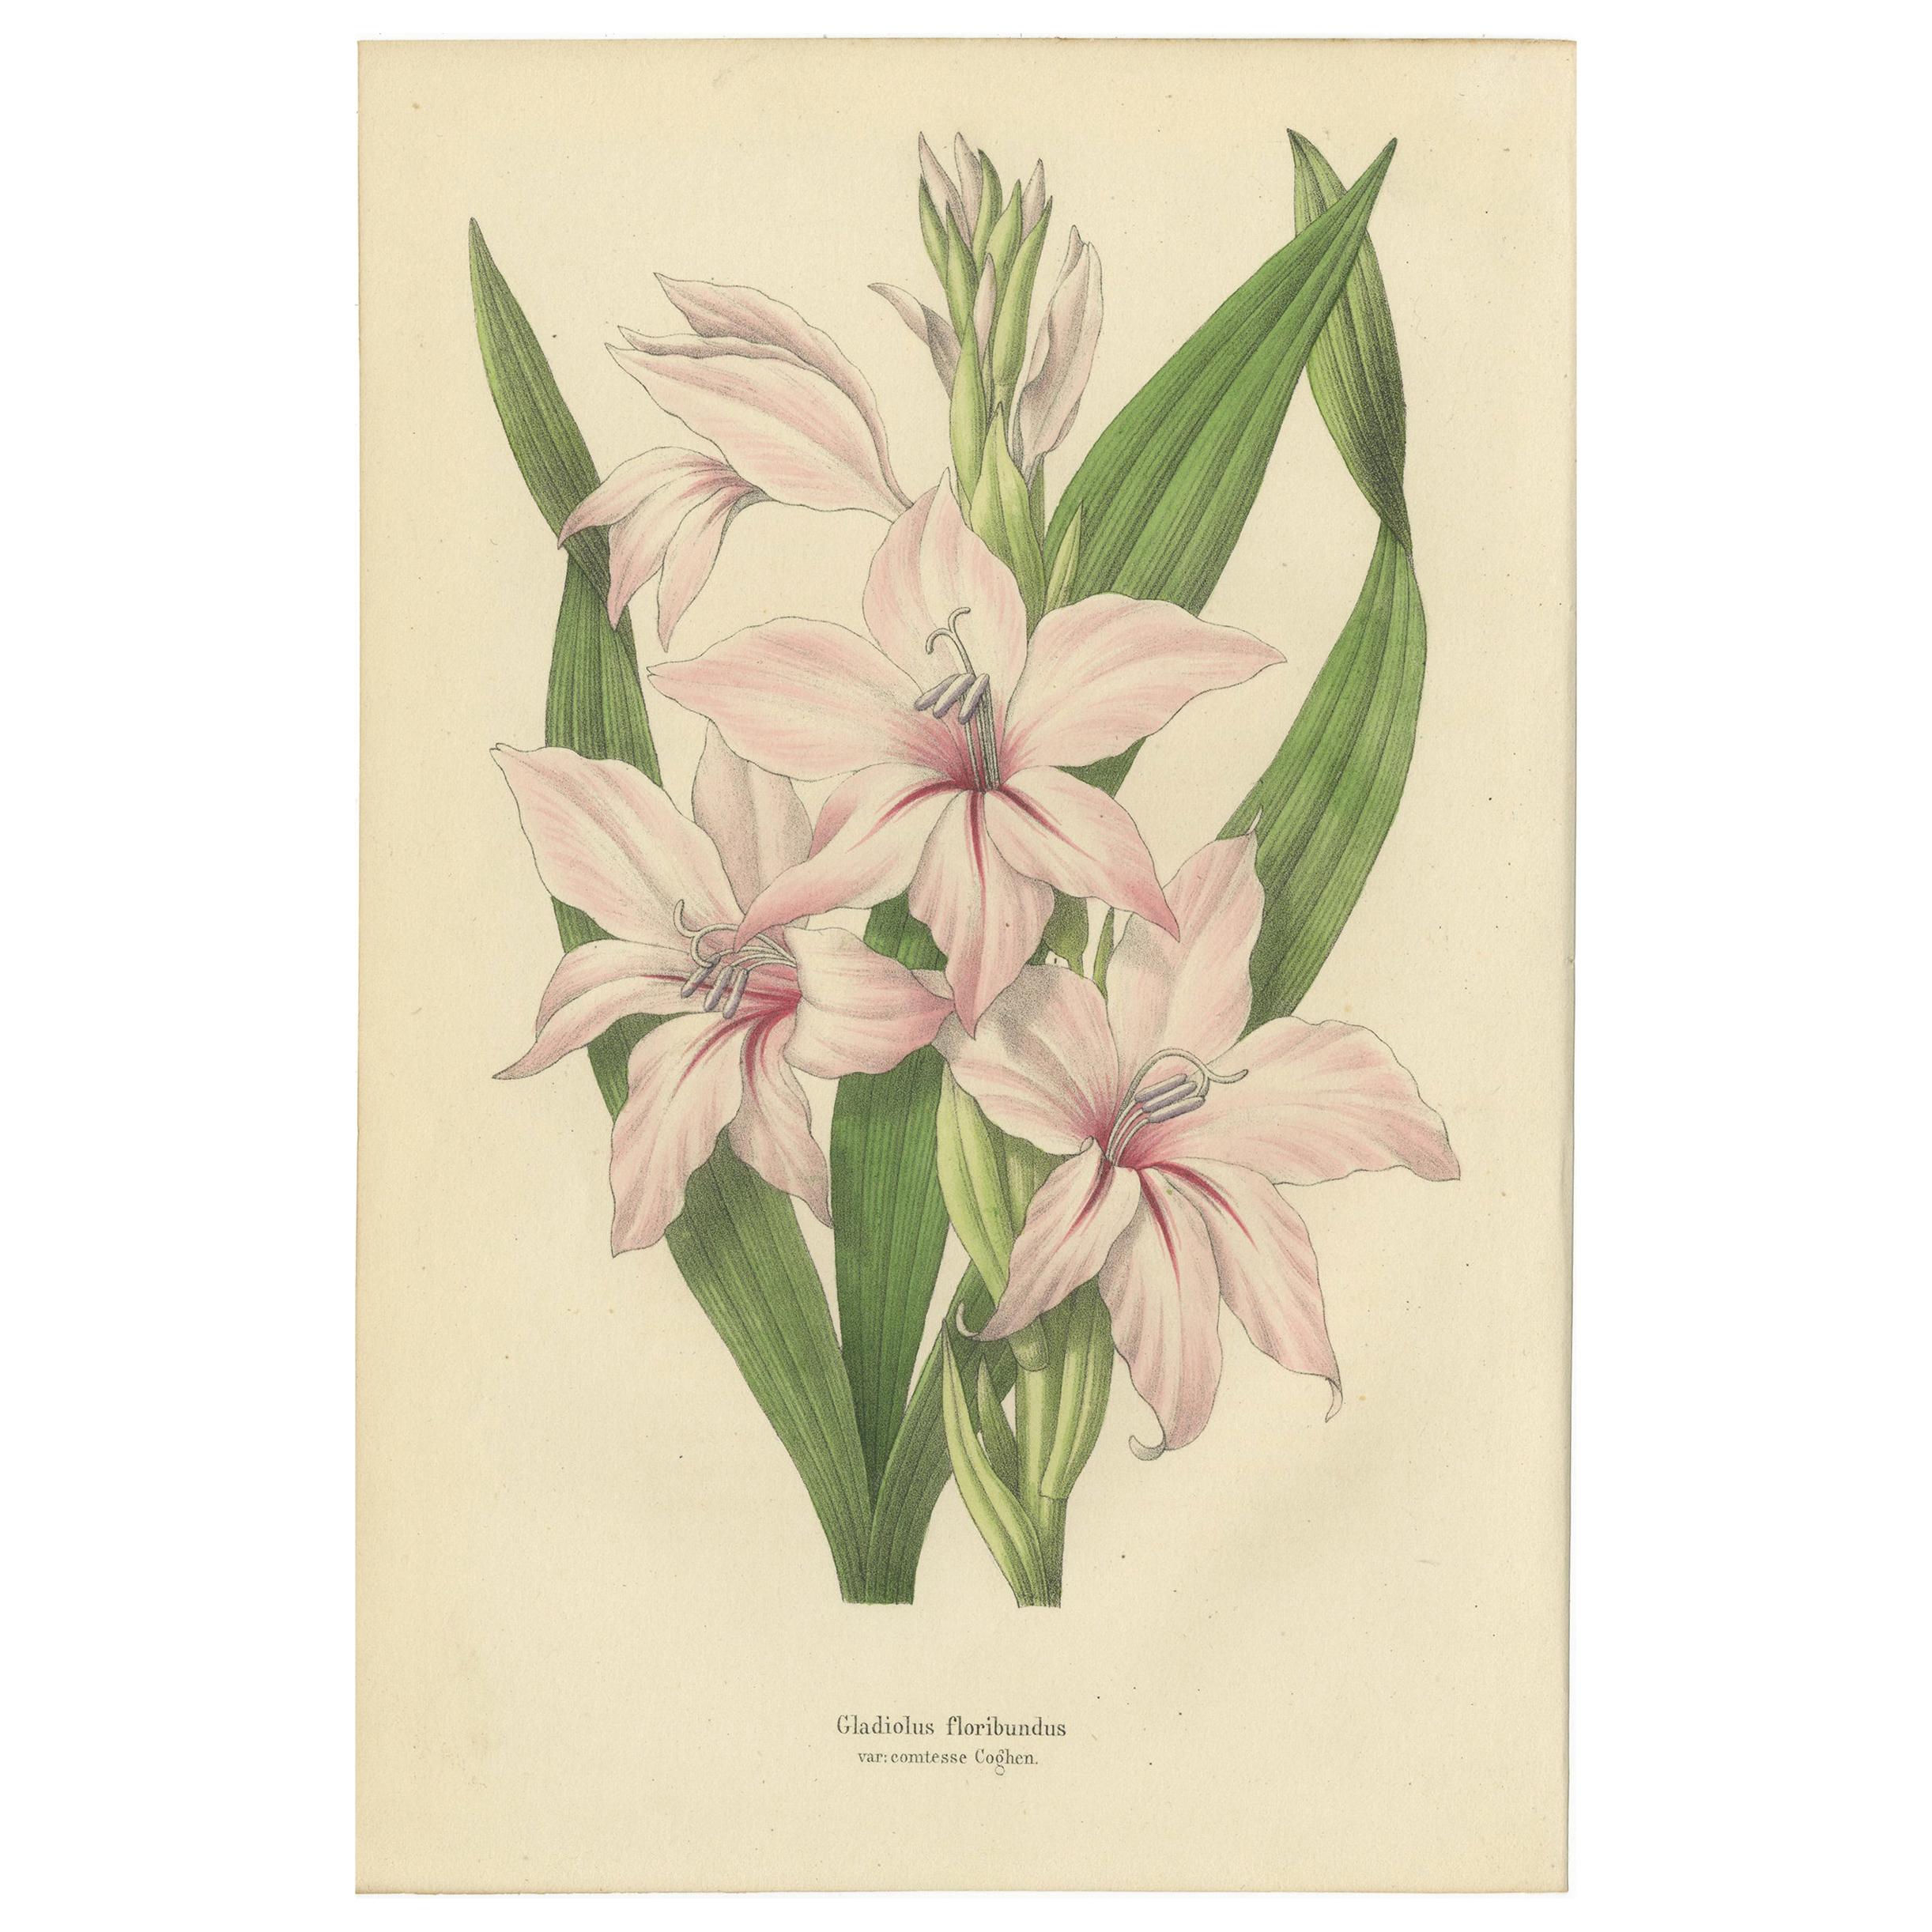 Antique Botany Print of the Gladiolus Floribundus, 1847